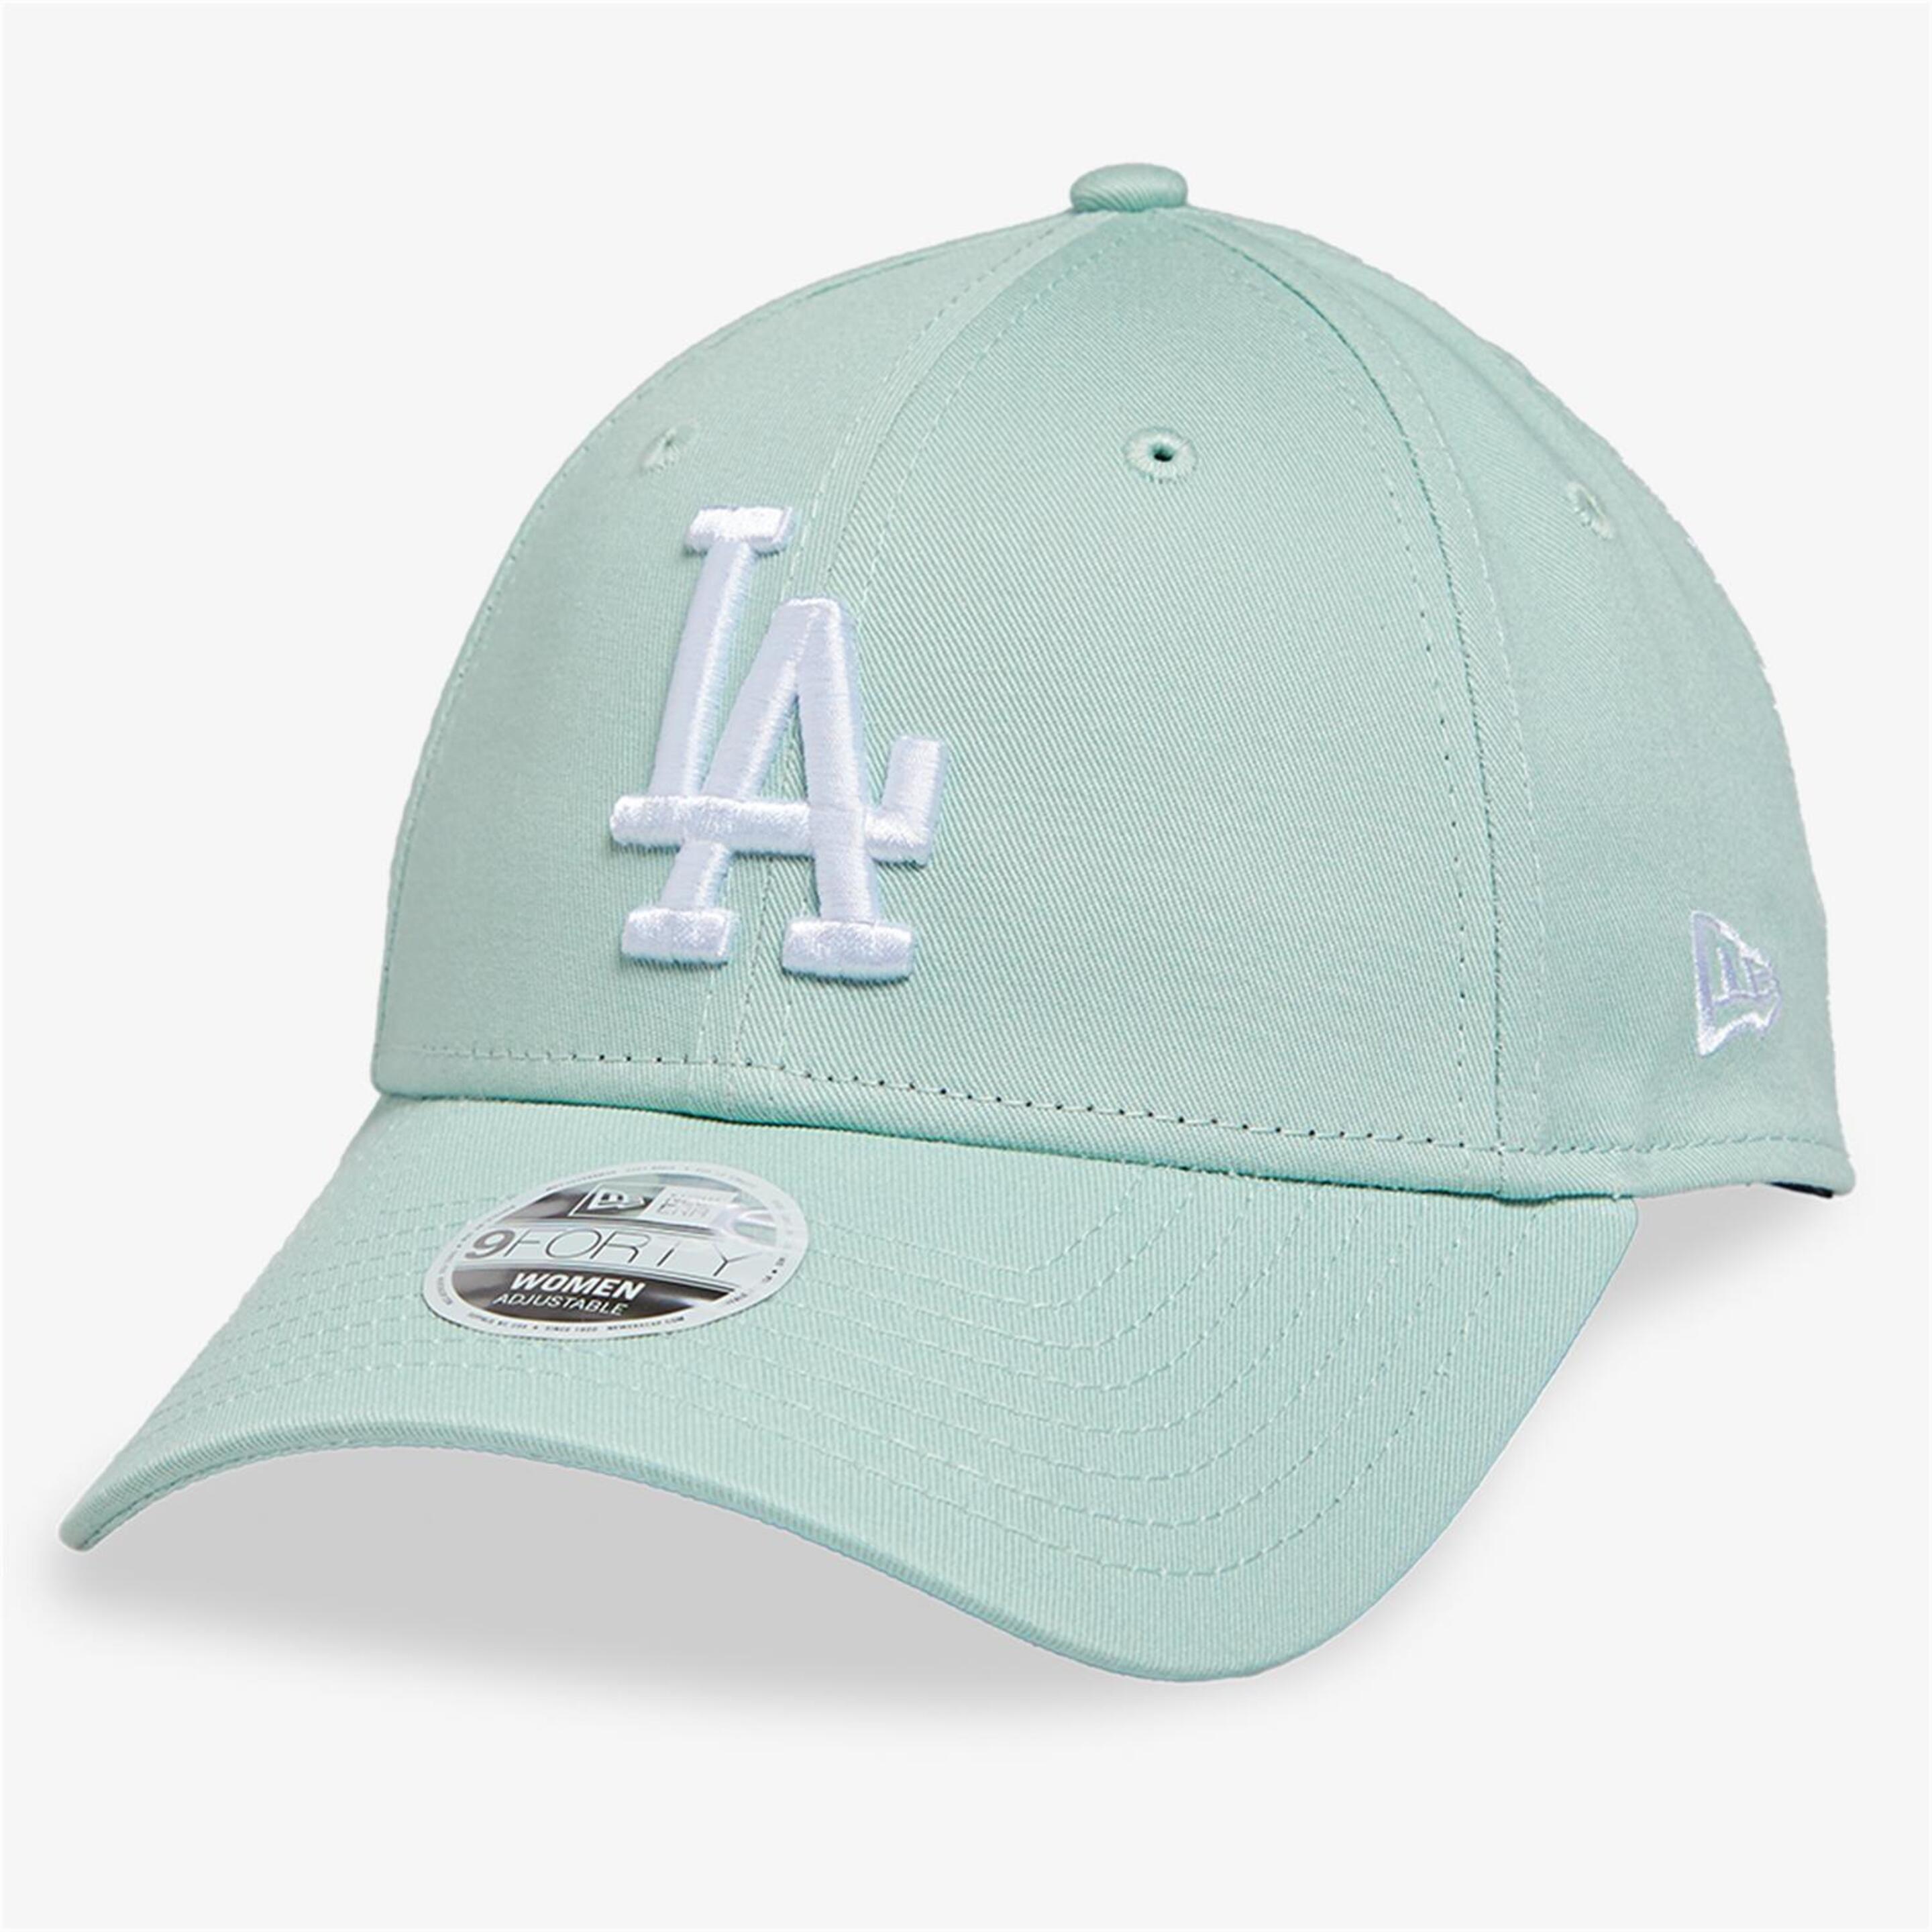 New Era La Dodgers - verde - Boné